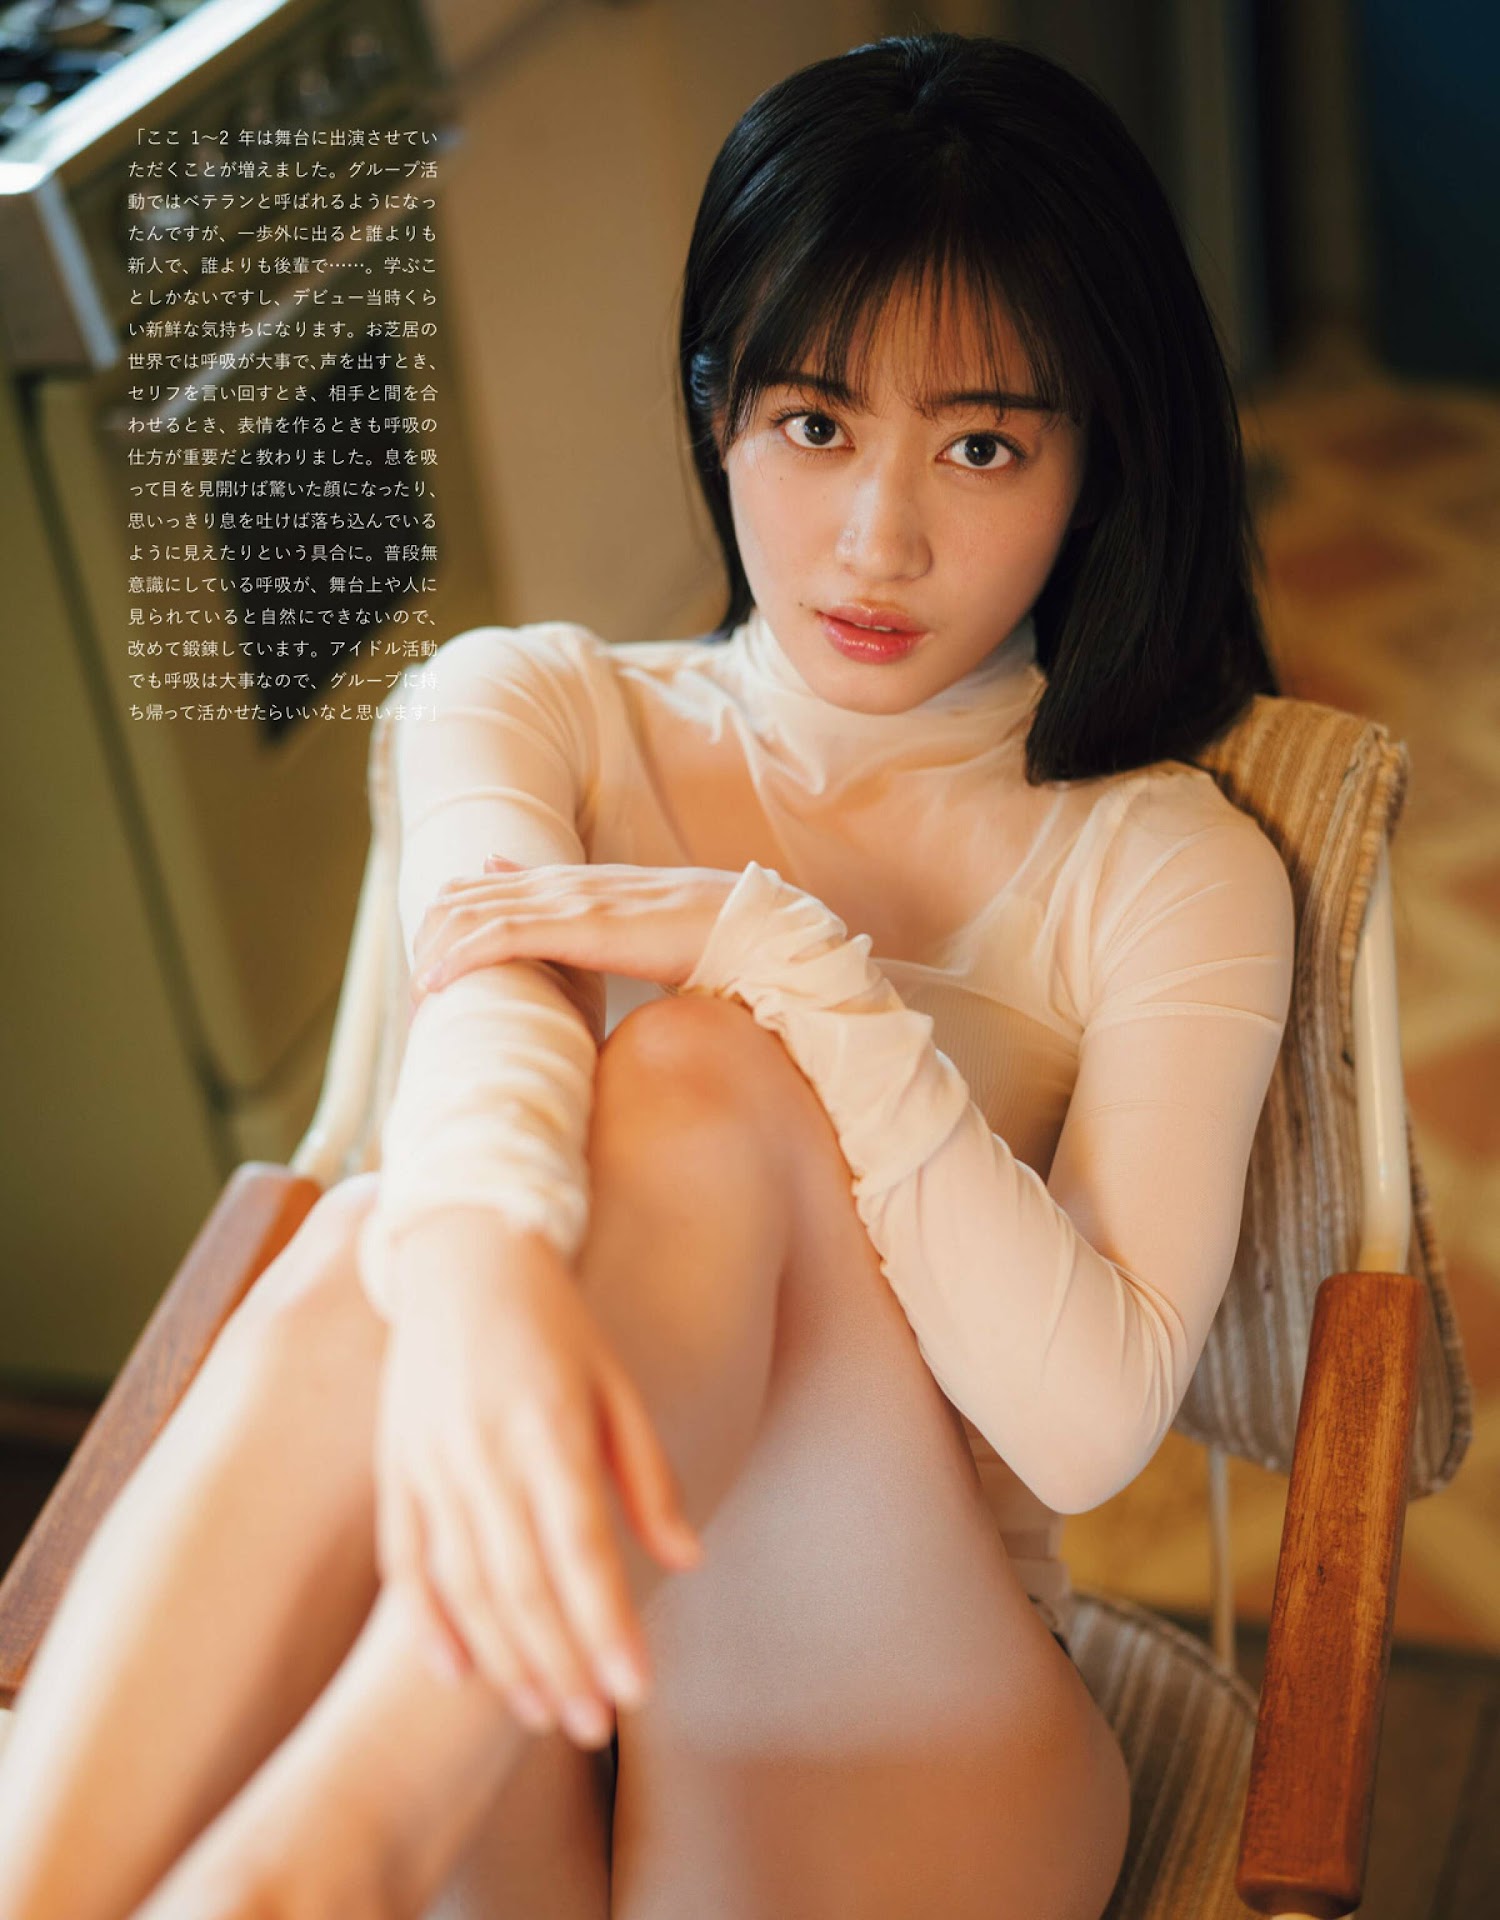 EMO girl NMB48スペシャル Mook 高清套图 第23张